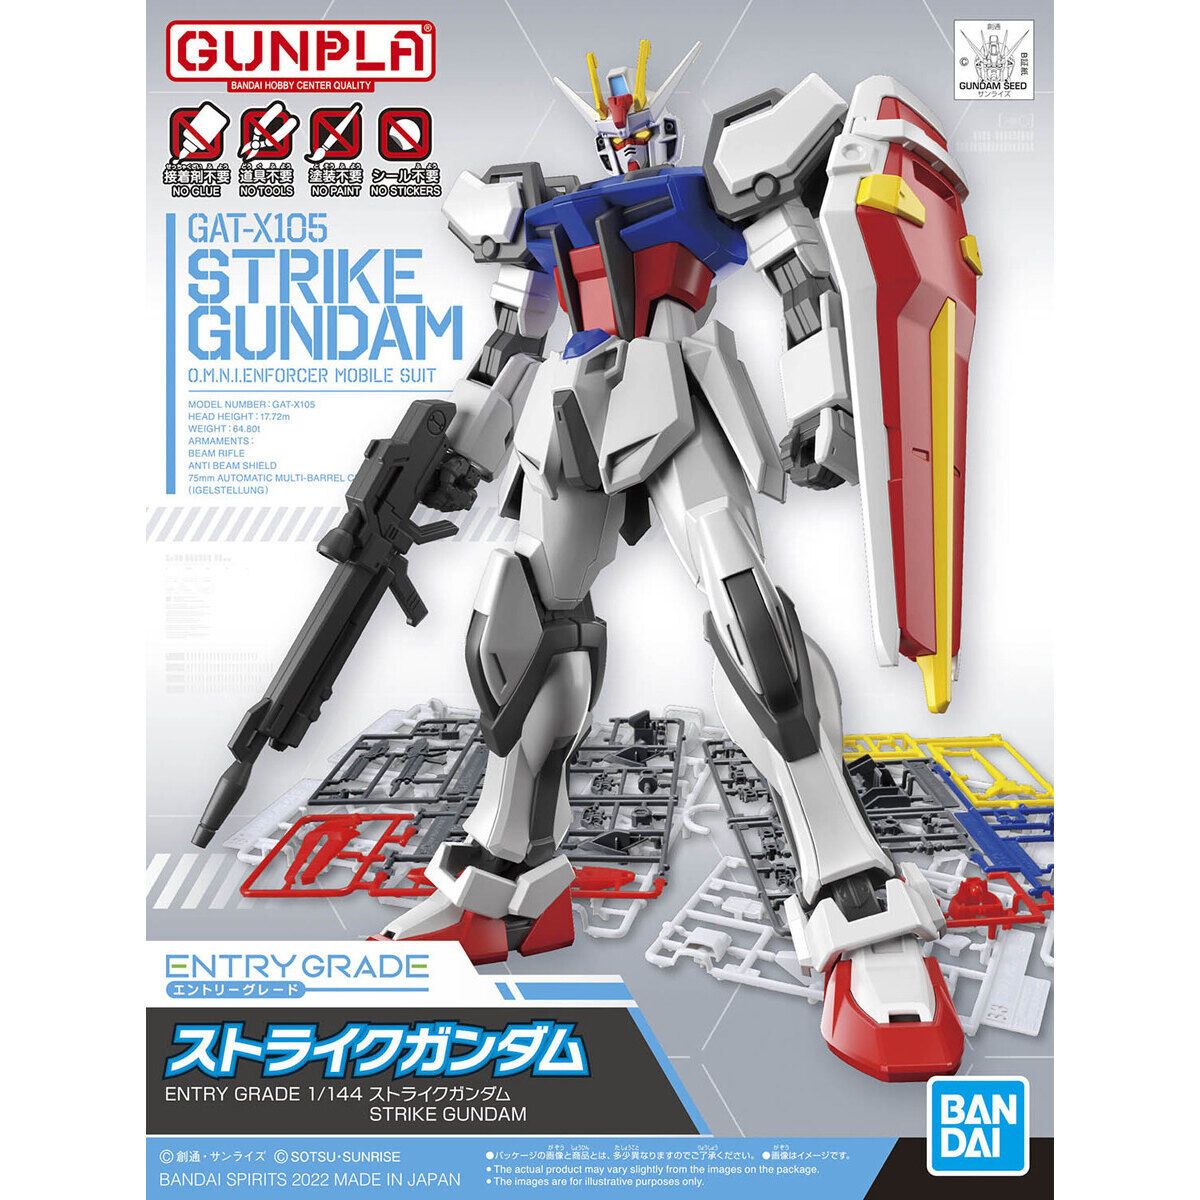 Bandai 1/144 Scale Entry Grade GAT-X105 Strike Gundam Model Kit